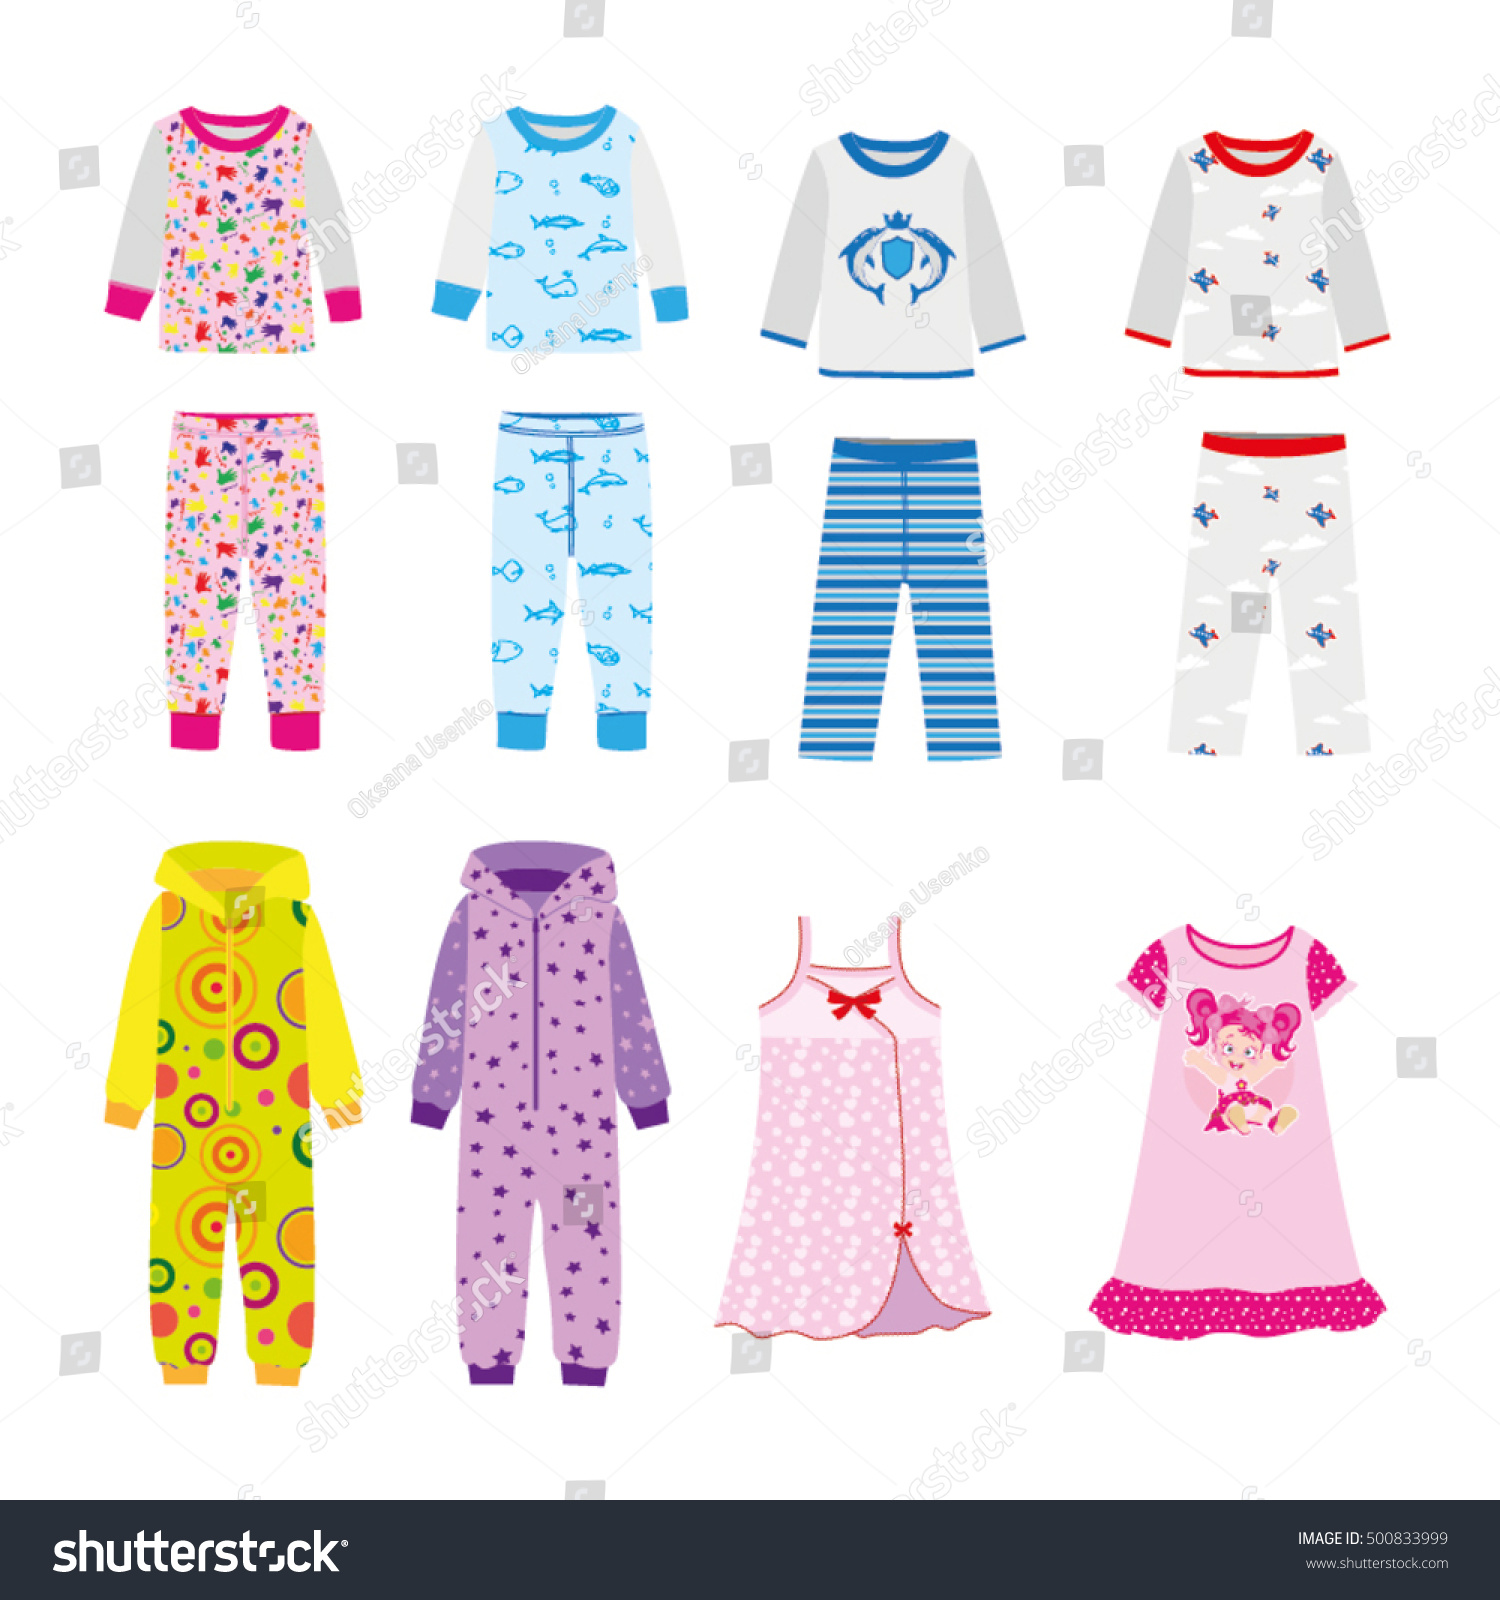 1,532 Girl night suit designs Images, Stock Photos & Vectors | Shutterstock